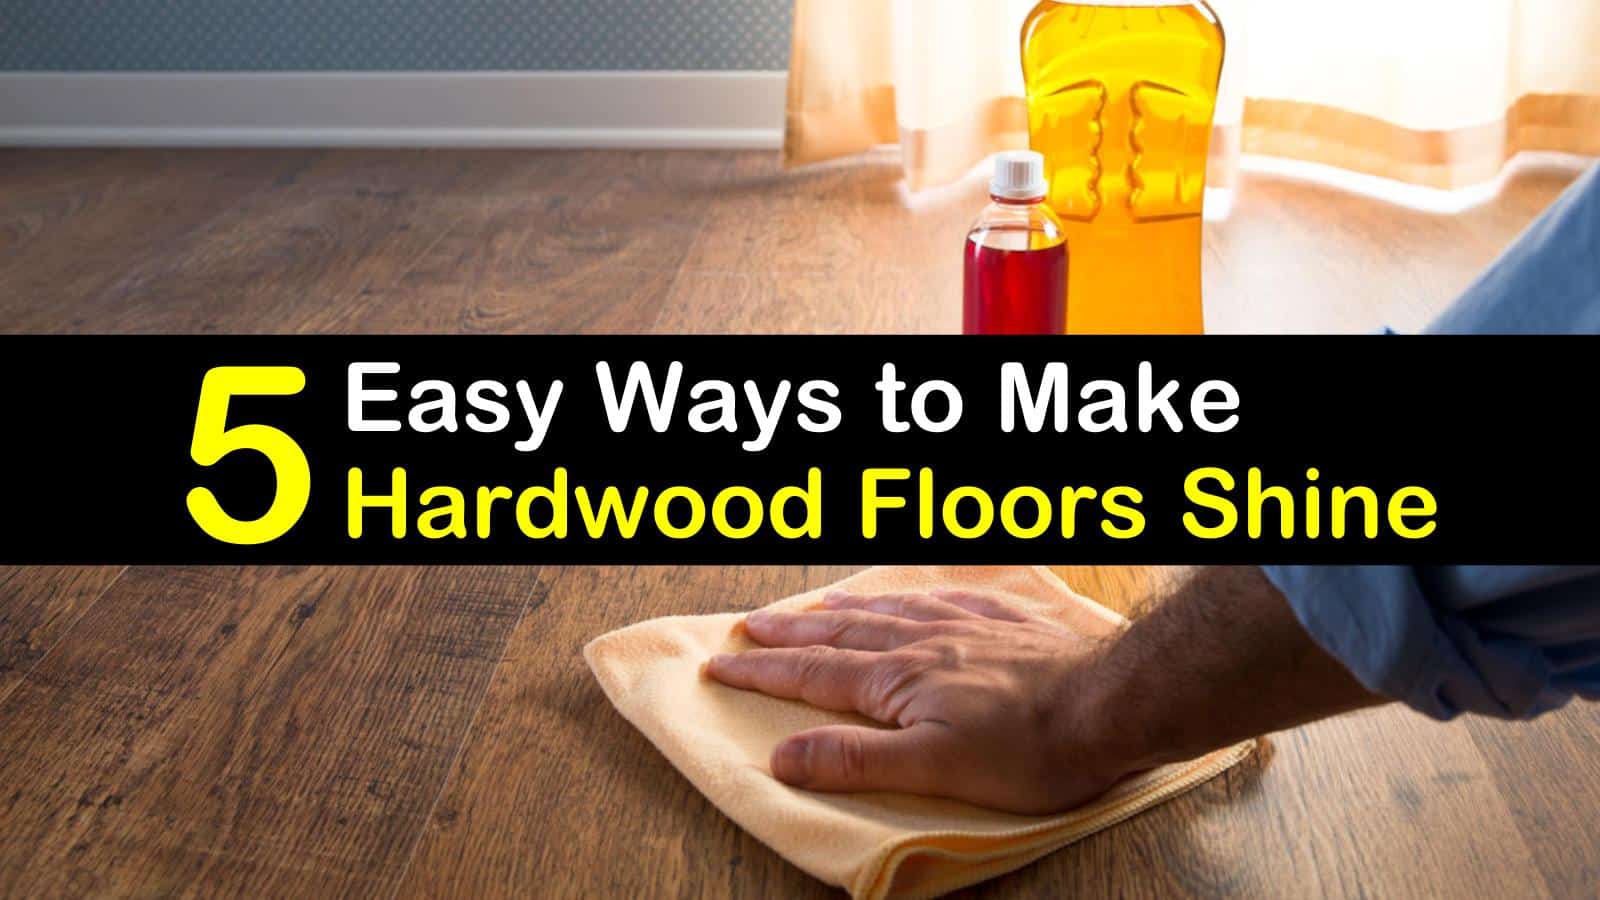 5 Easy Ways To Make Hardwood Floors Shine, How To Make My Laminate Wood Floors Shine